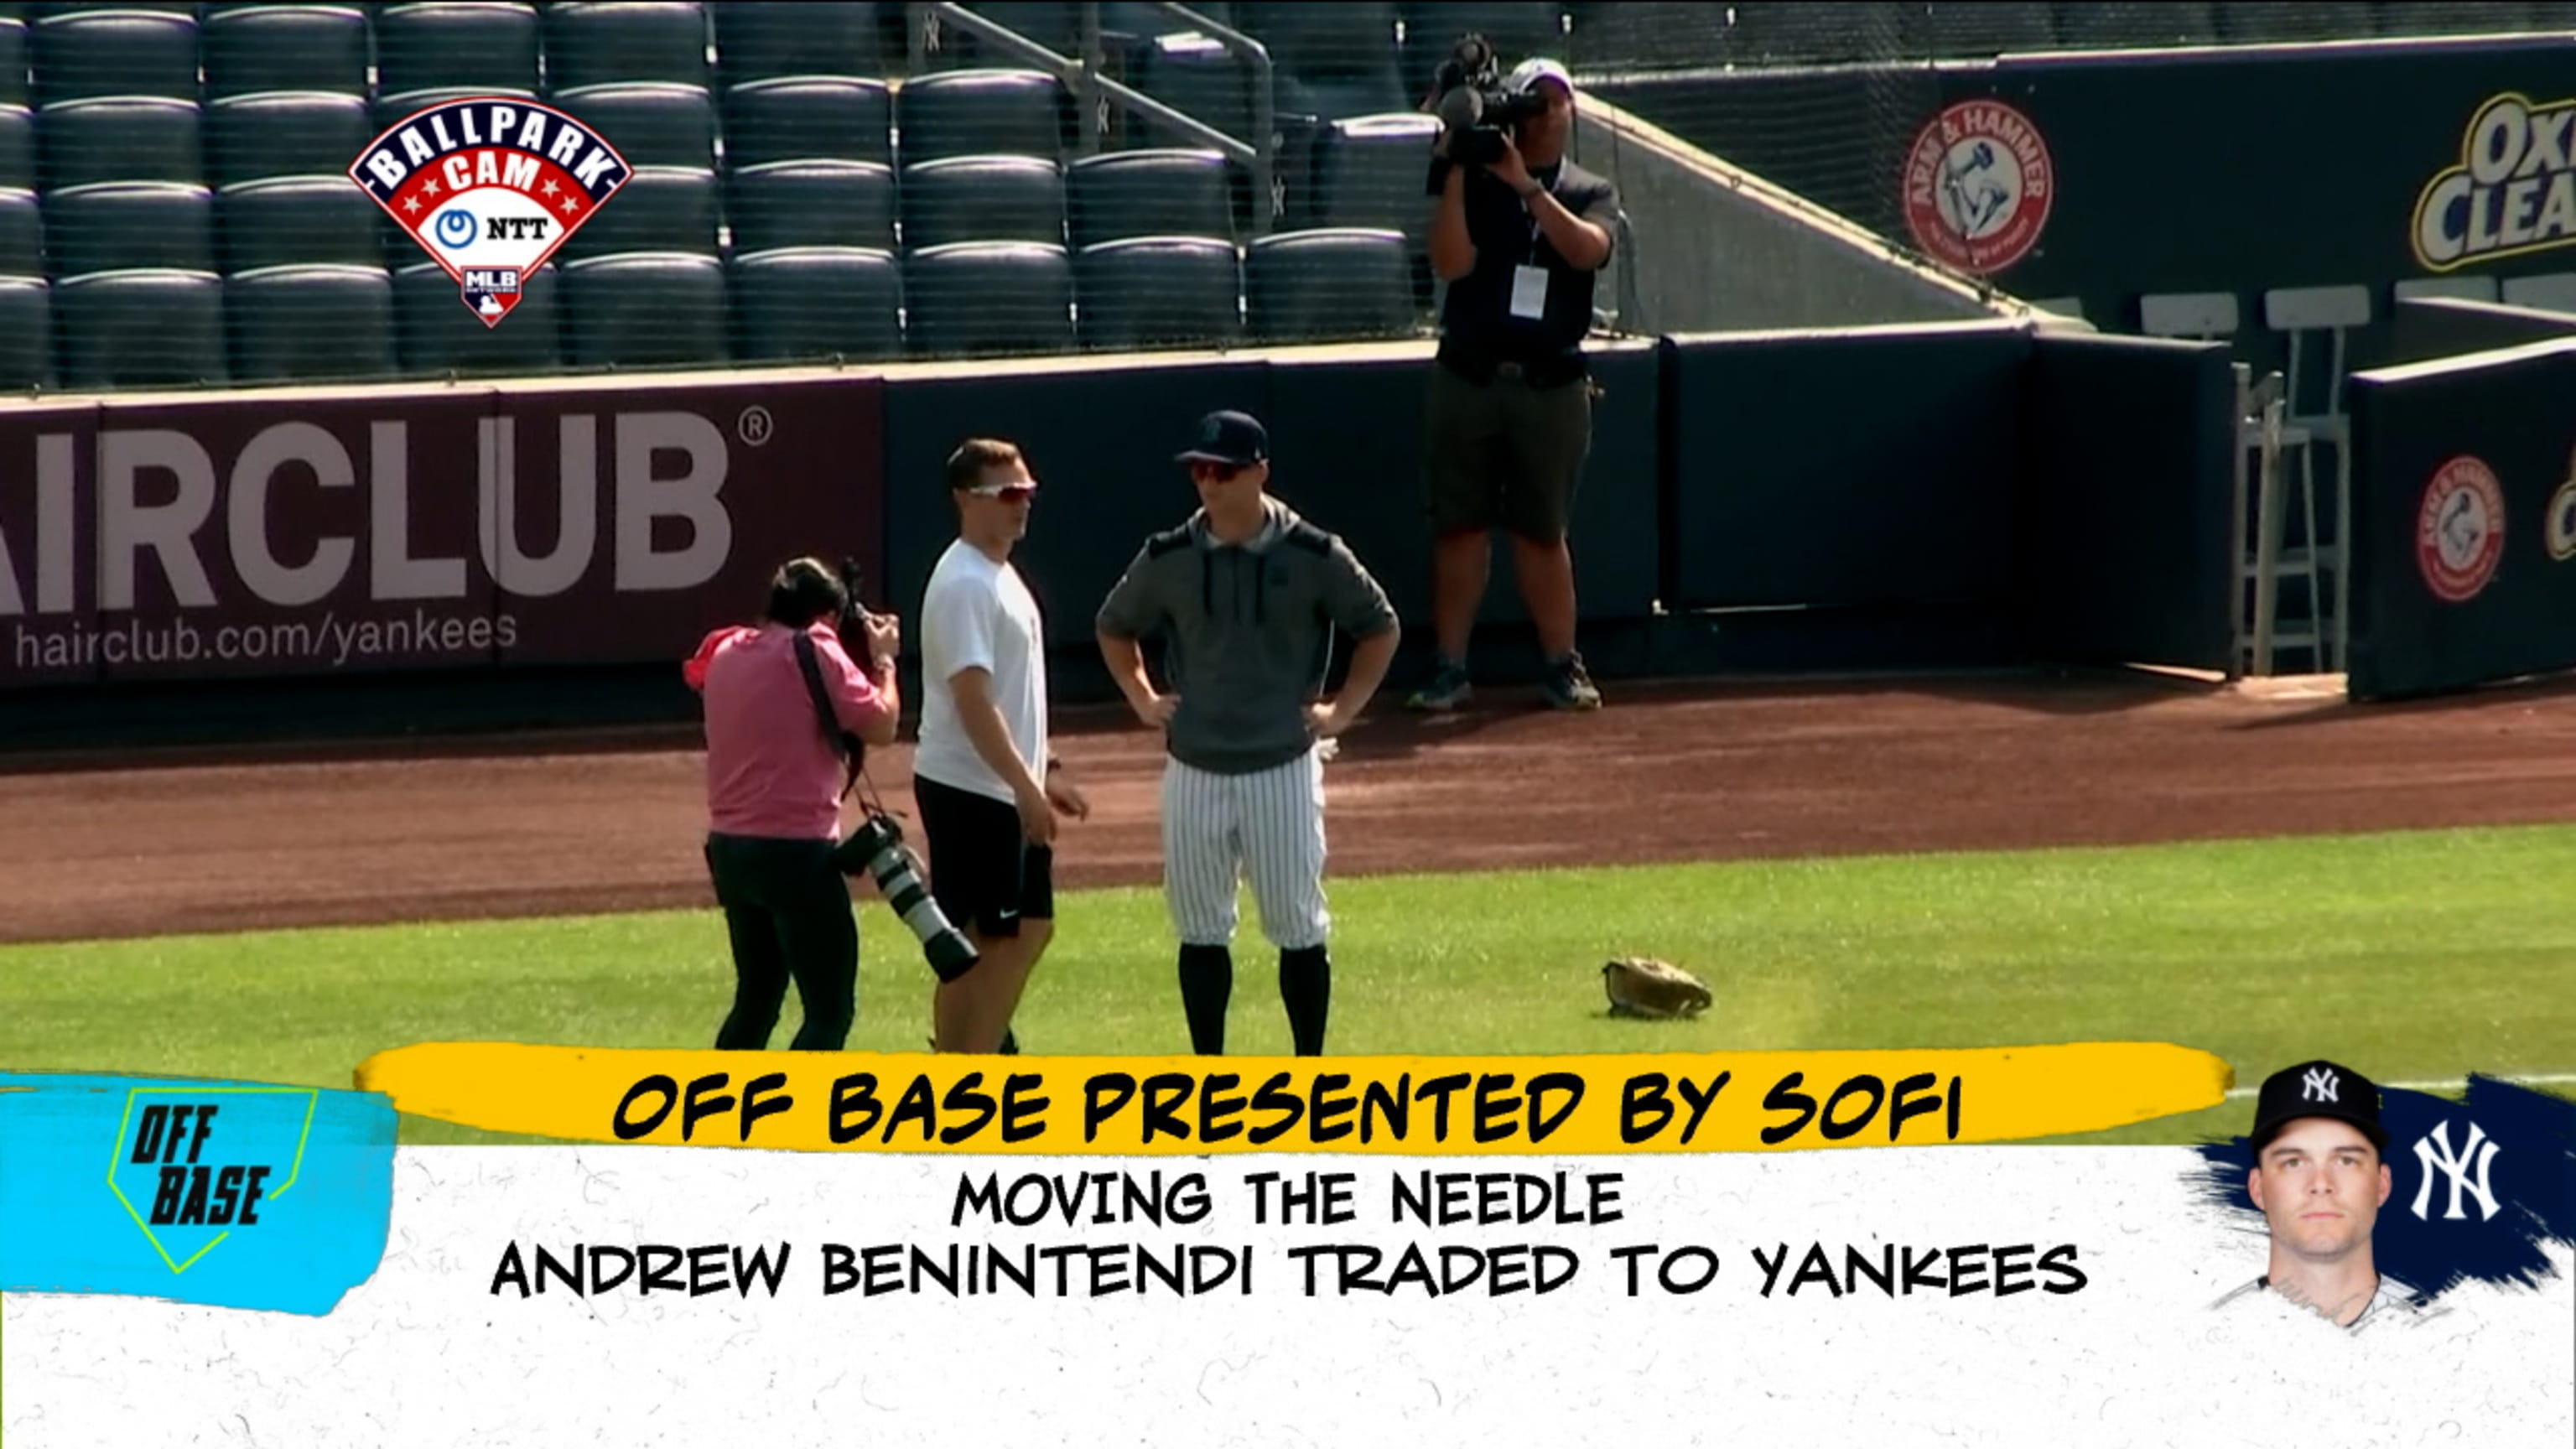 Andrew Benintendi traded to Yankees